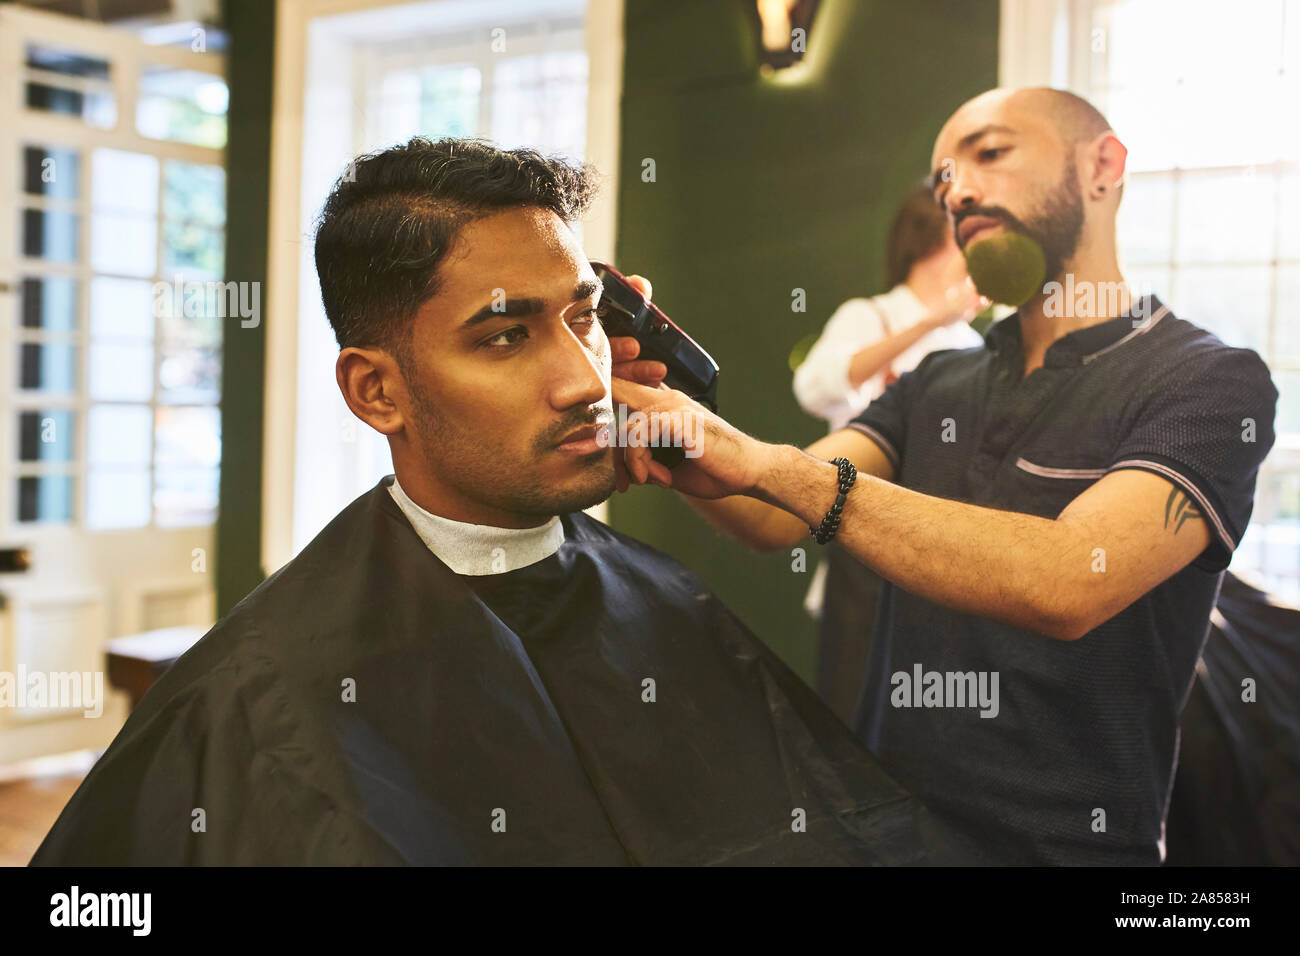 Male barber shaving hair of customer in barbershop Stock Photo